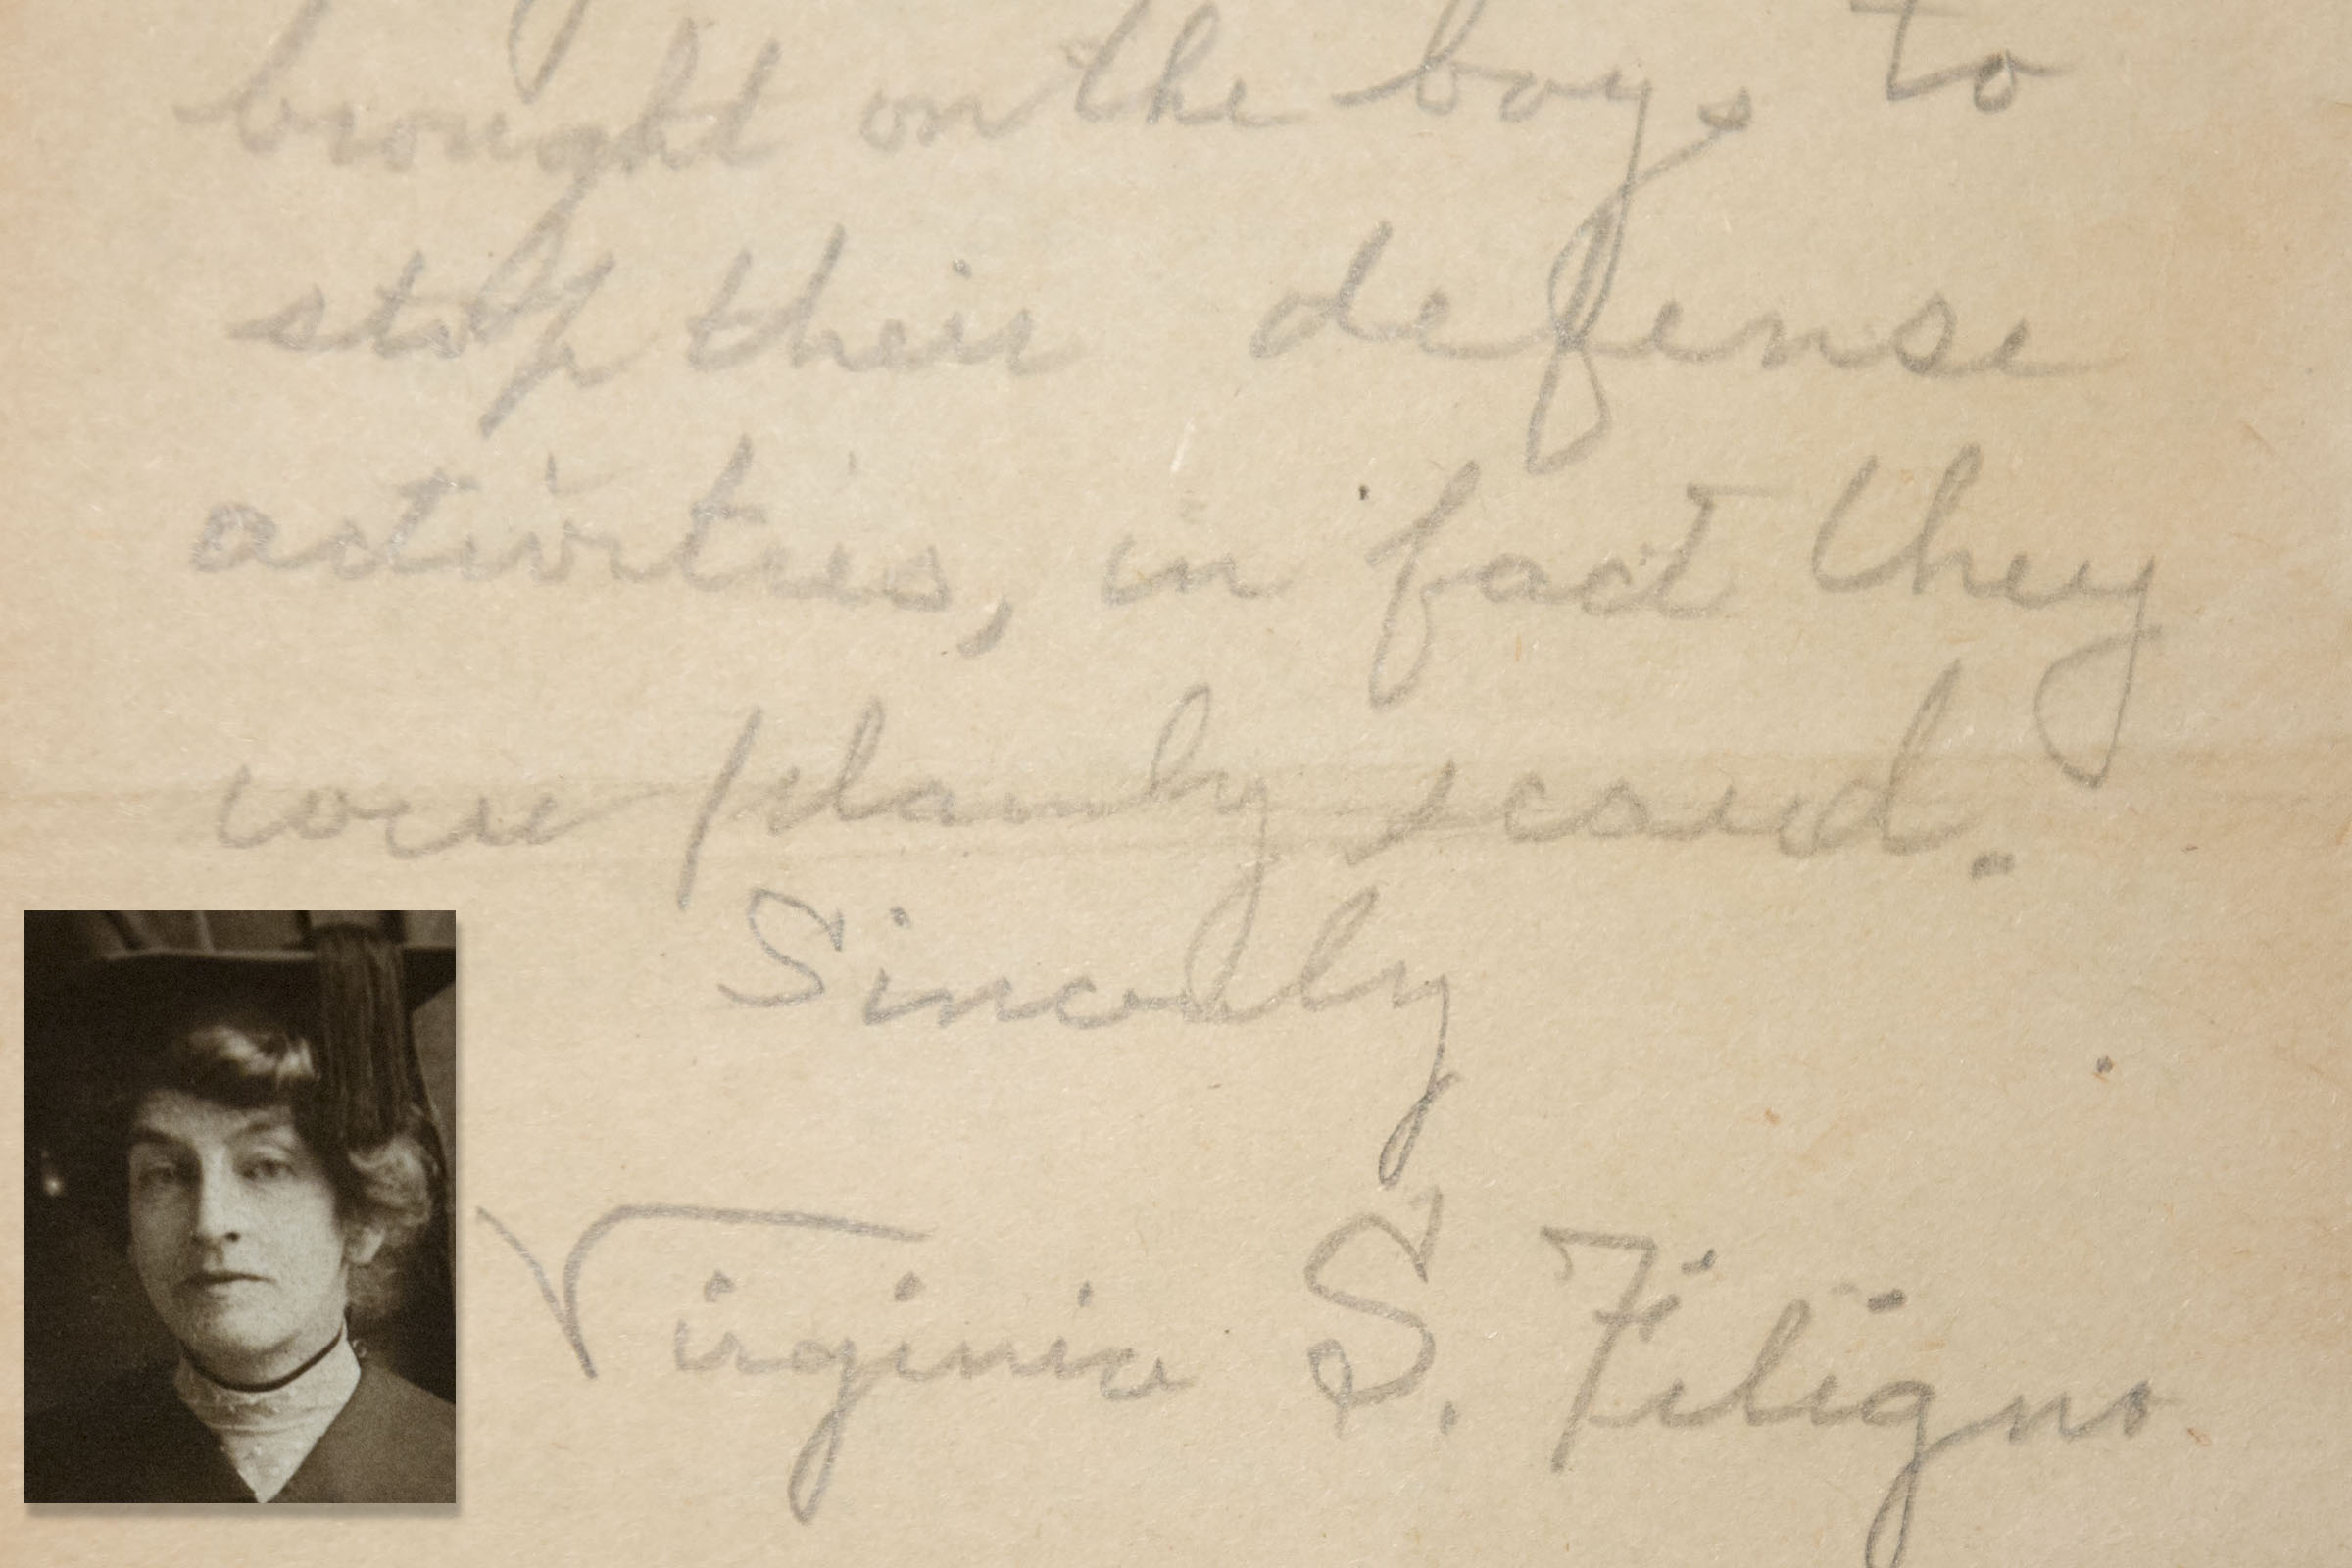 Letter from Virginia Snow Filigno